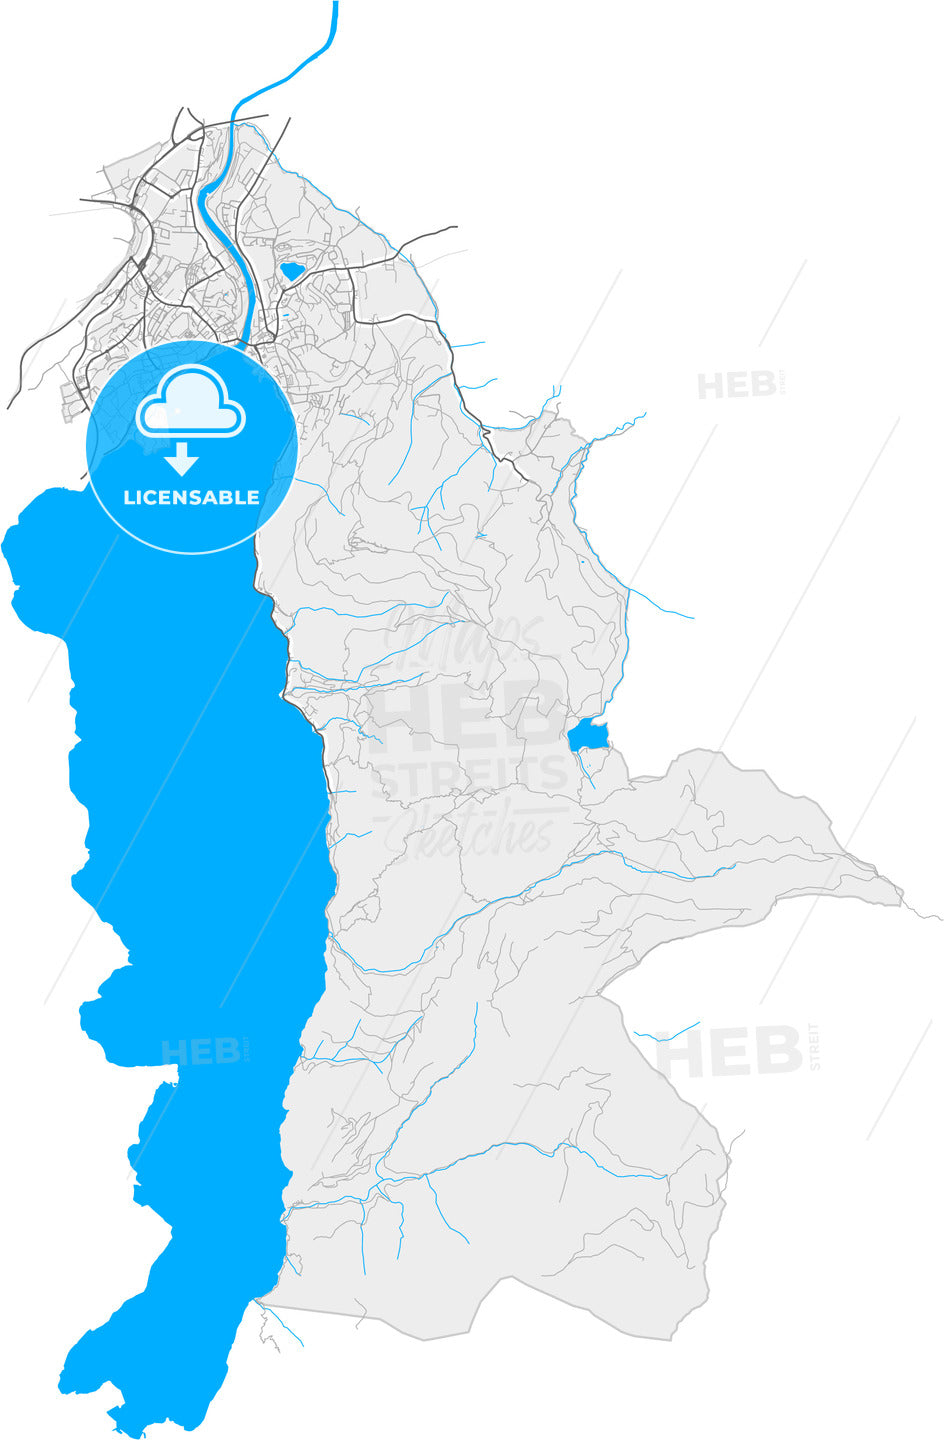 Gmunden, Upper Austria, Austria, high quality vector map